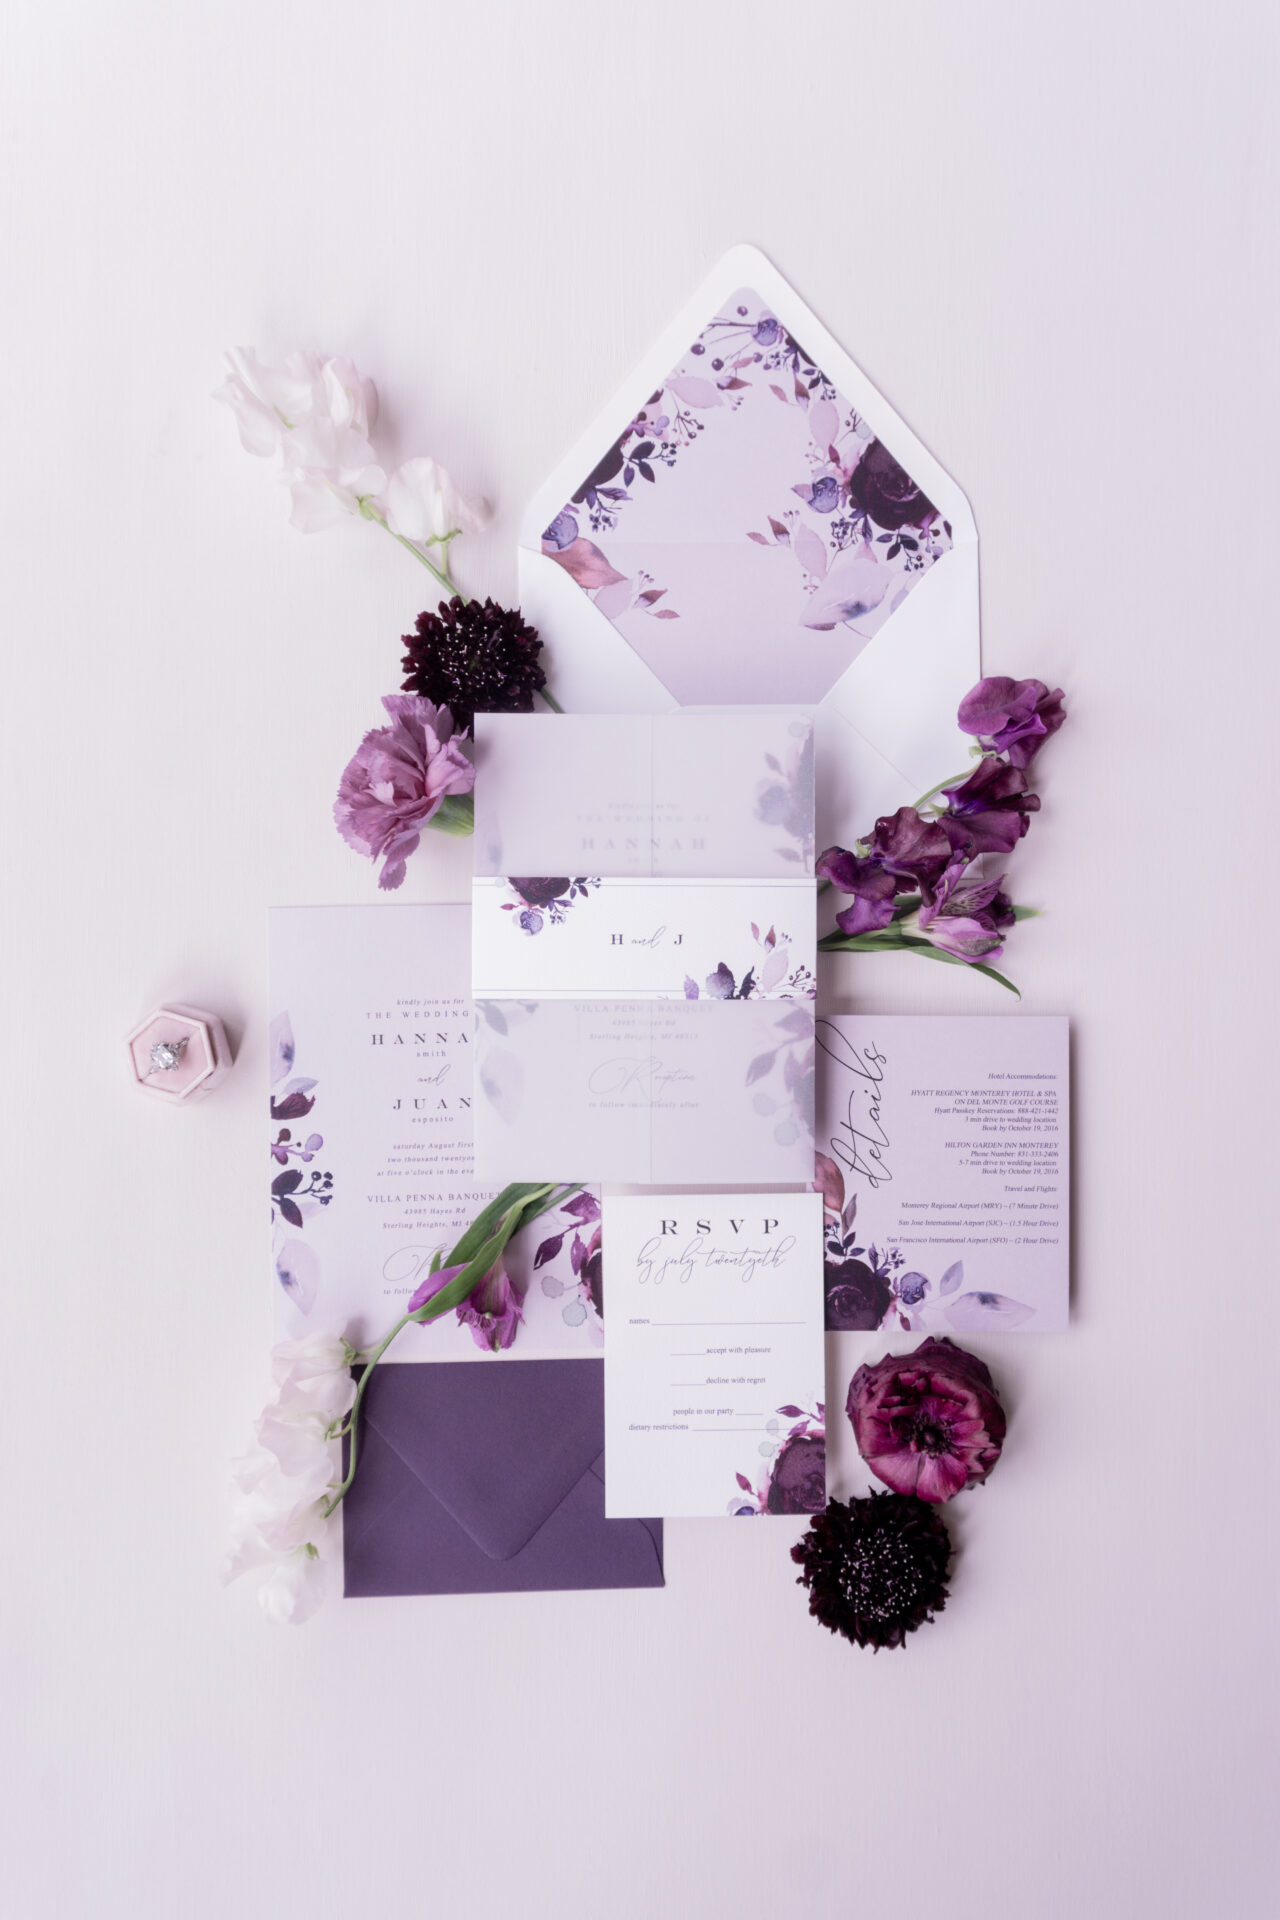 25 Dark Purple A7 Envelopes, Aubergine Envelopes, Plum Eggplant Envelopes,  Dark Purple Wedding Invitation Envelopes, 5x7 A7 or 4bar A1 RSVP 